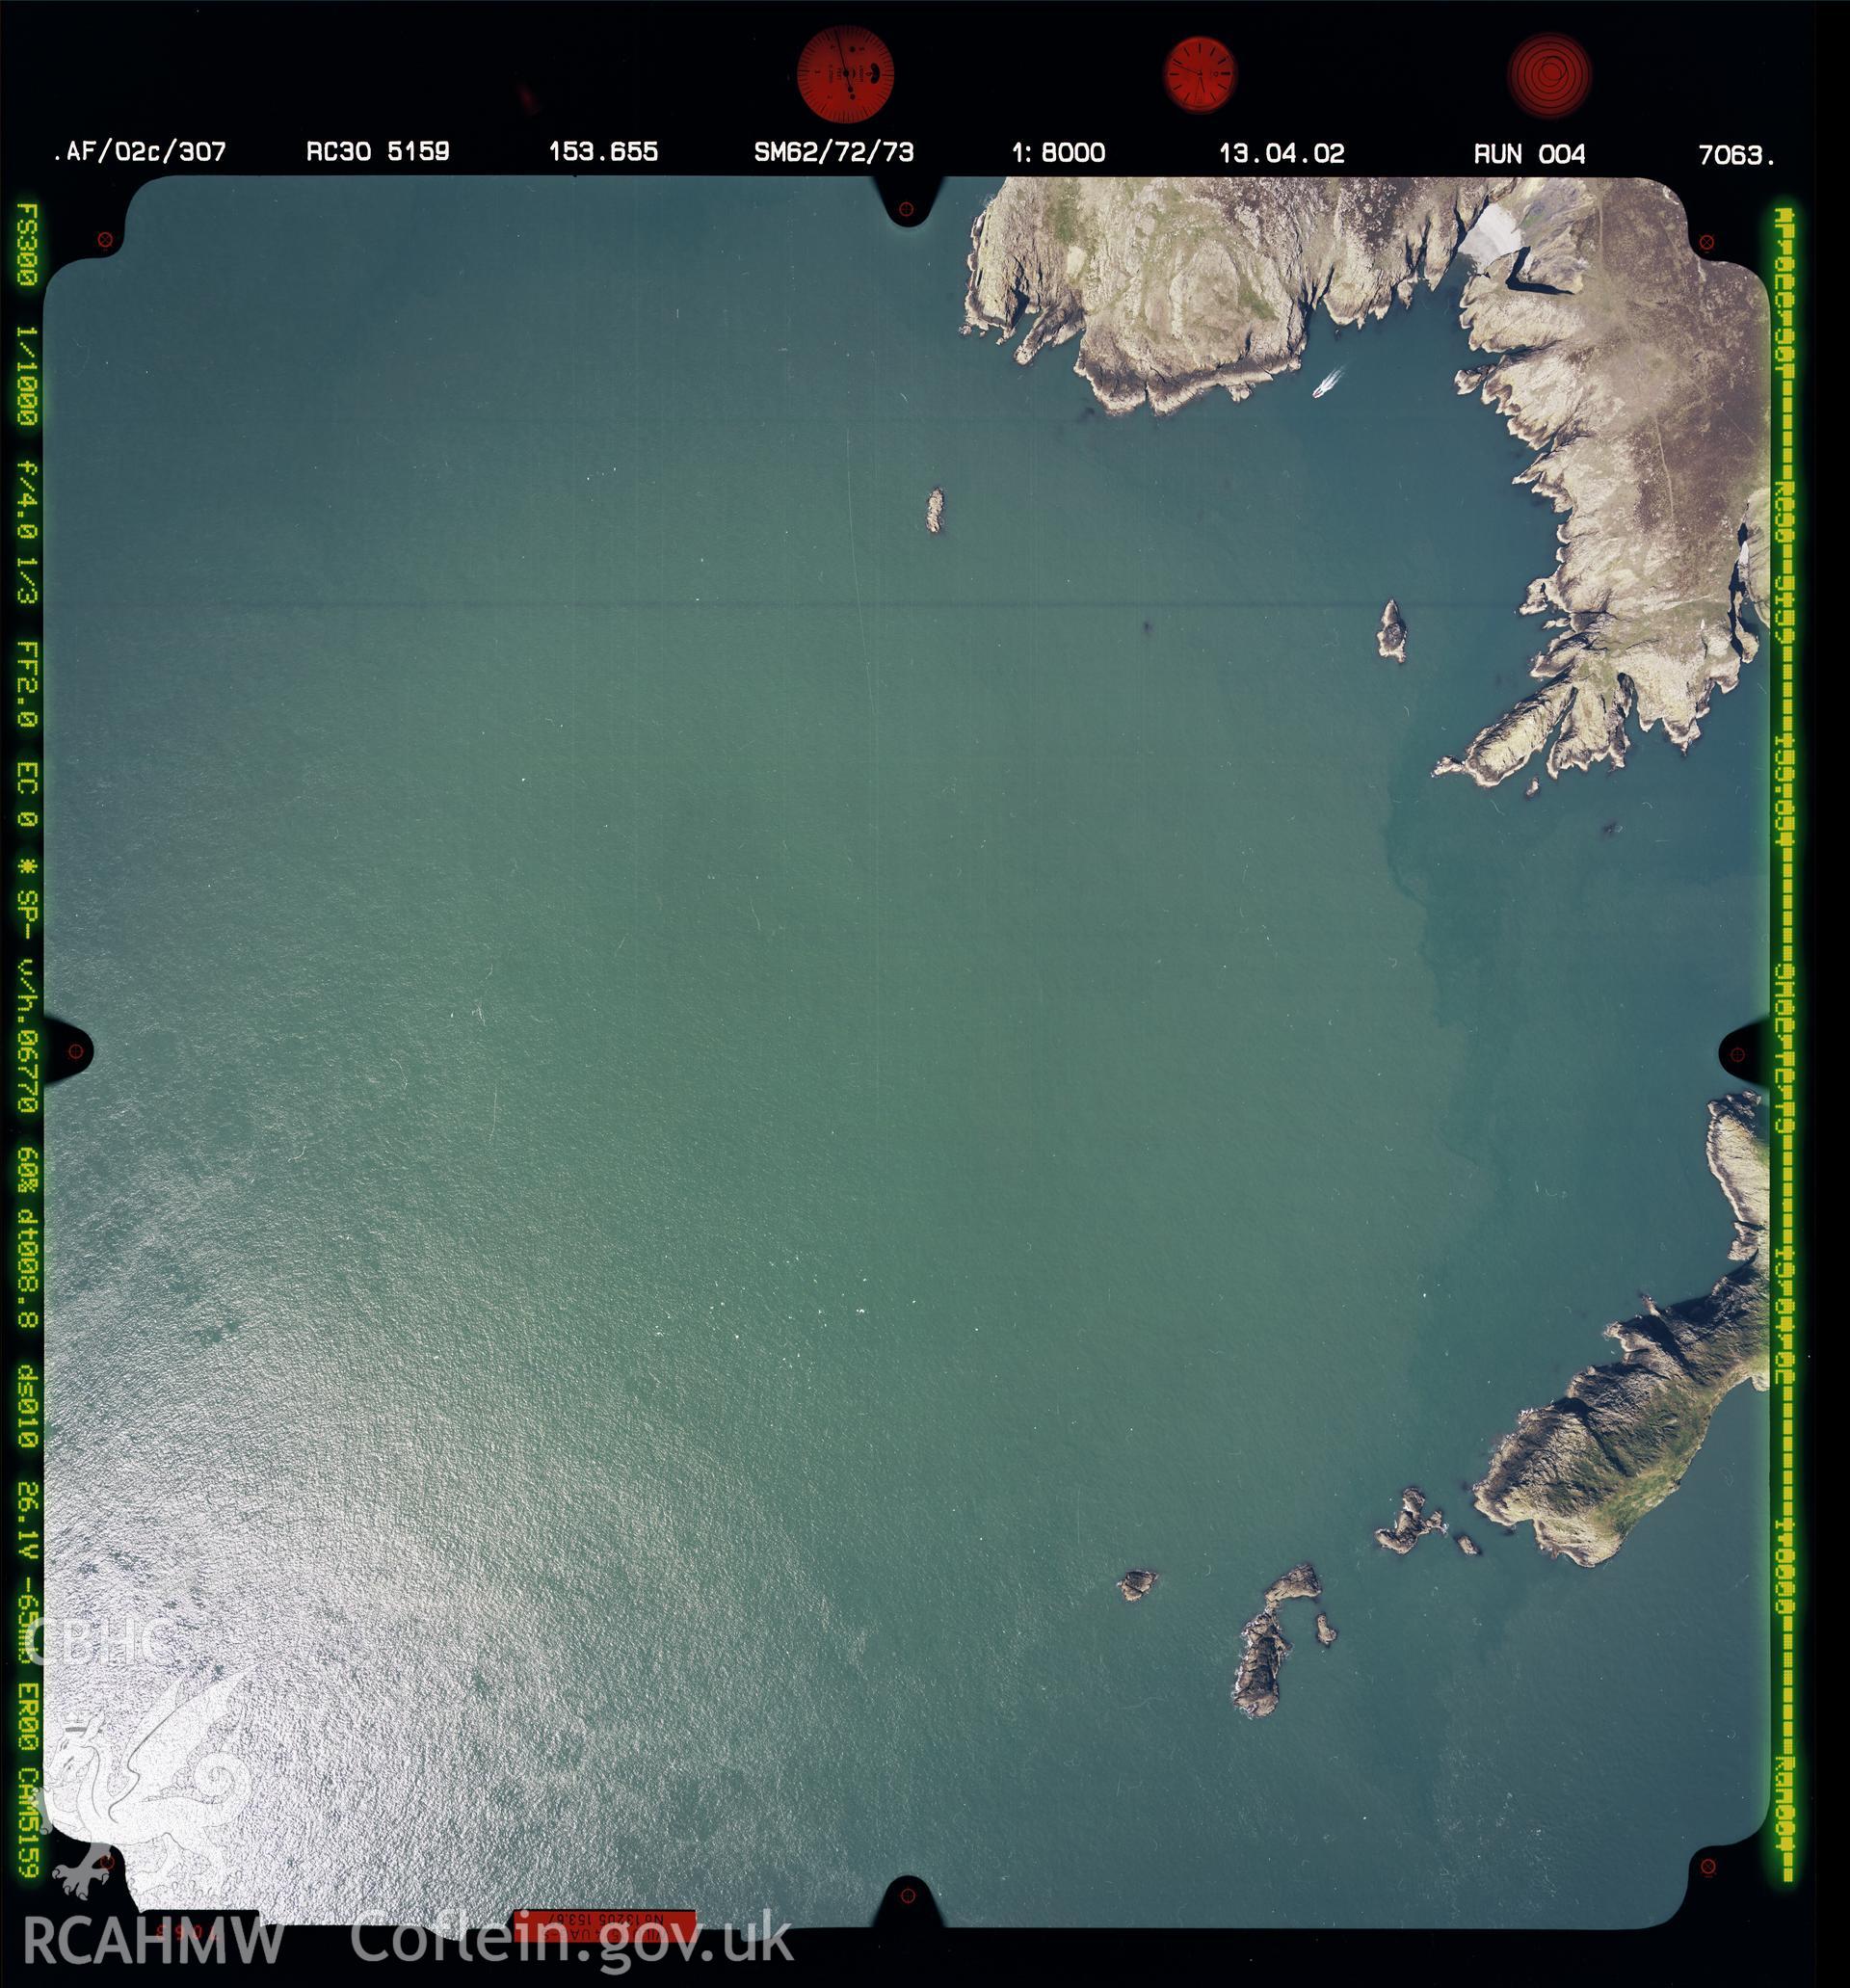 Digital copy of an aerial view of Ramsey Island taken by Ordnance Survey in 2002.